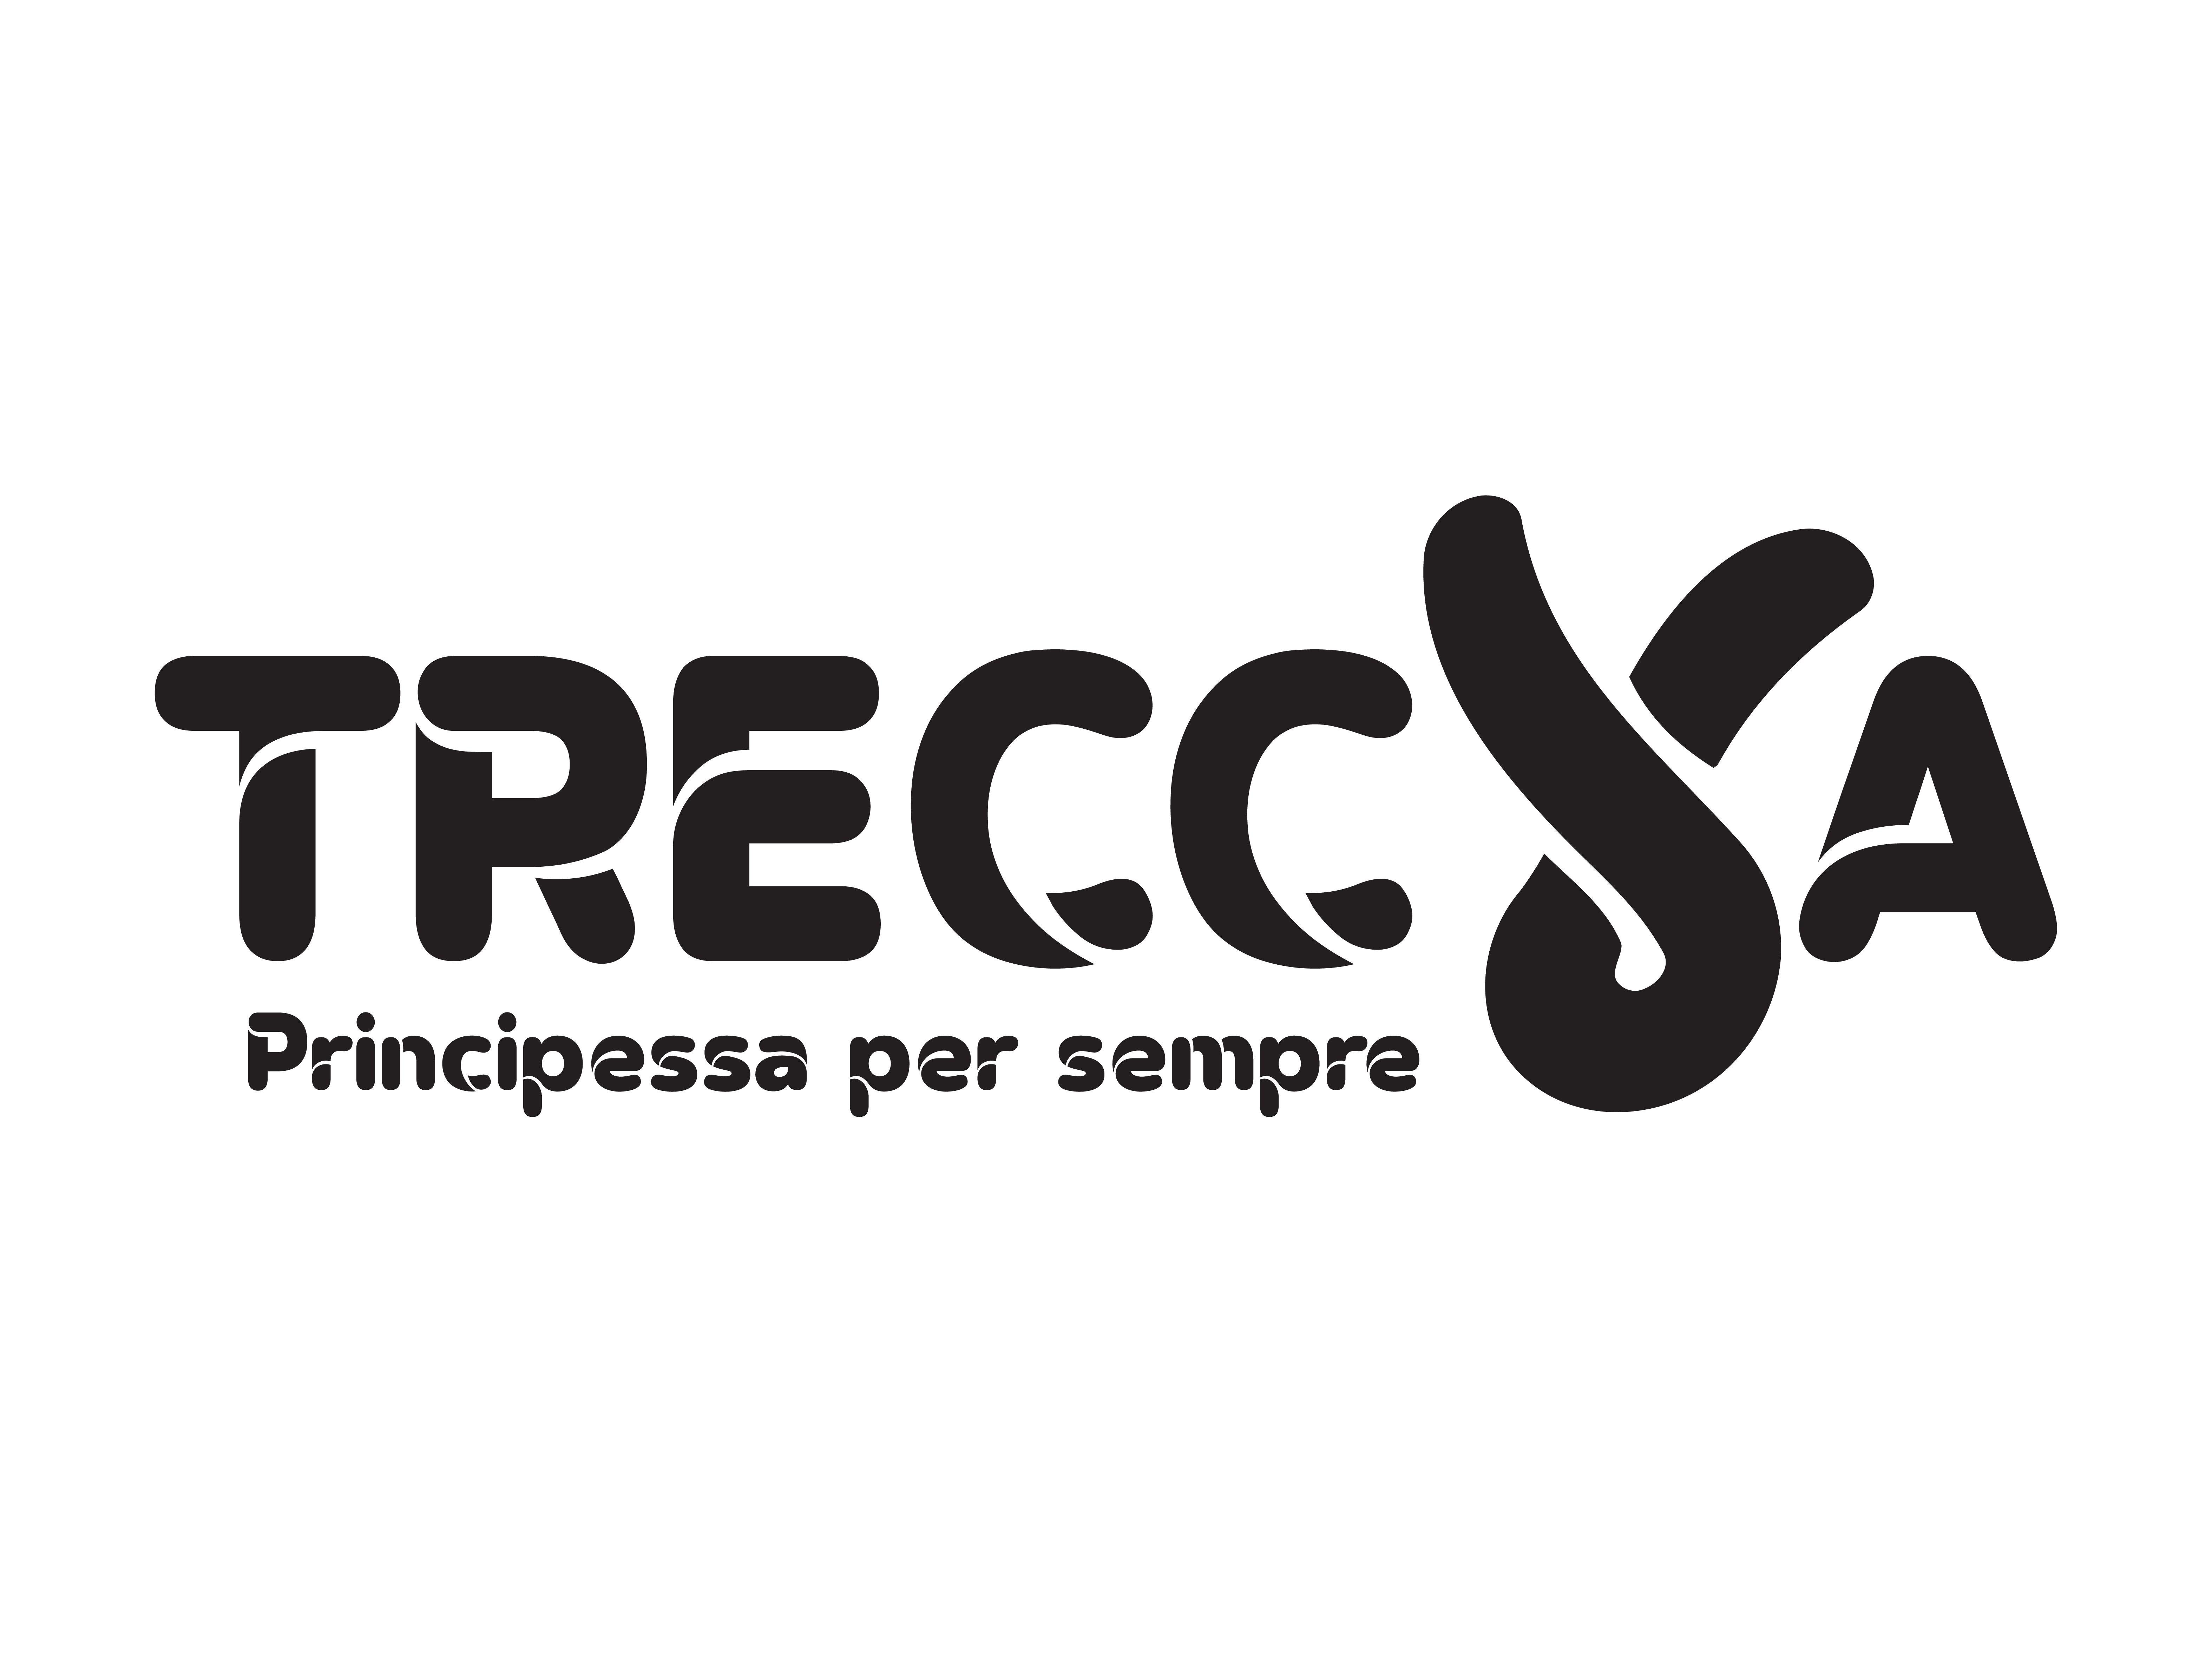 Treccya 